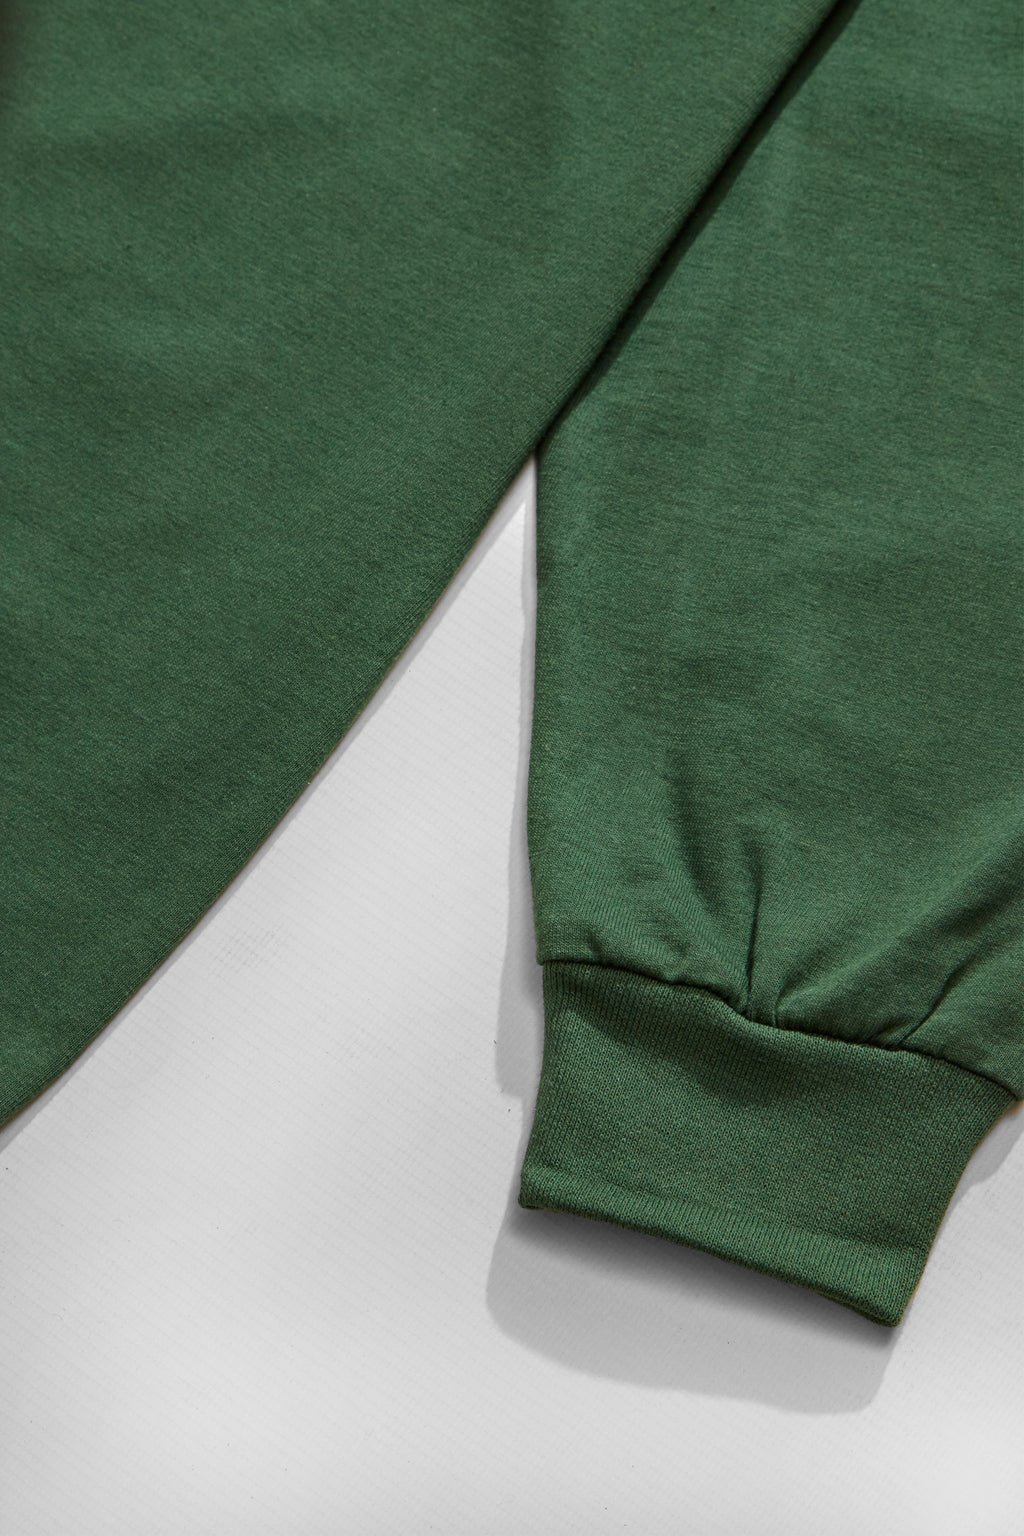 Pro Club - Heavyweight Long Sleeve T-Shirt - Forest Green